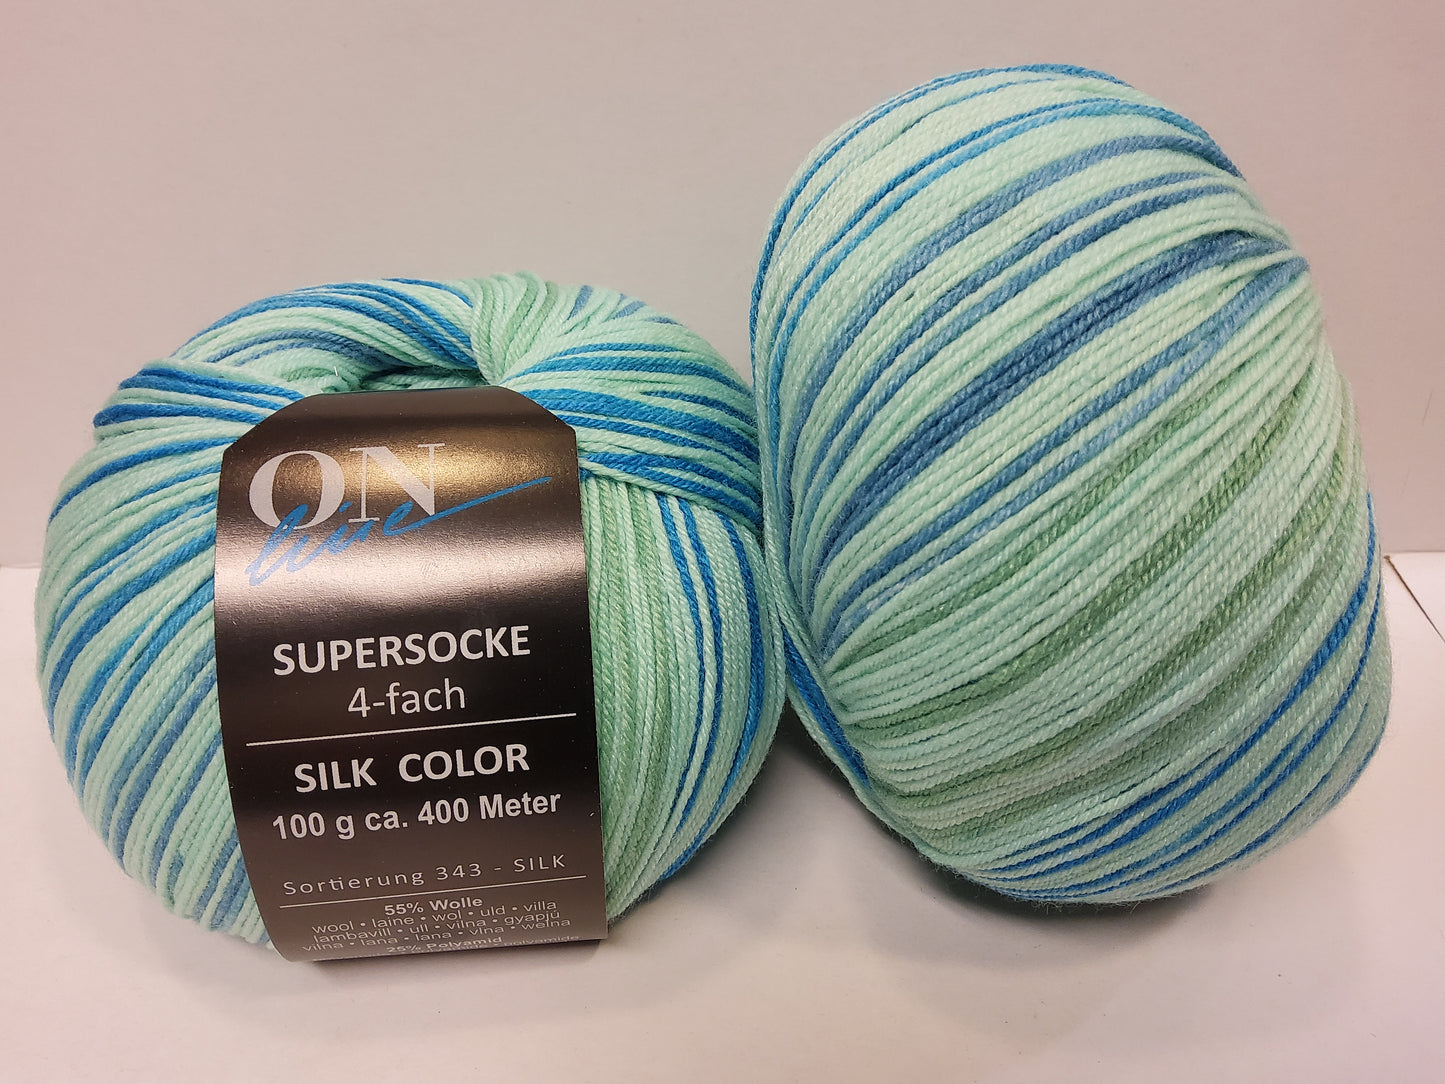 Supersocke 4-fach Silk Color Sortierung 343